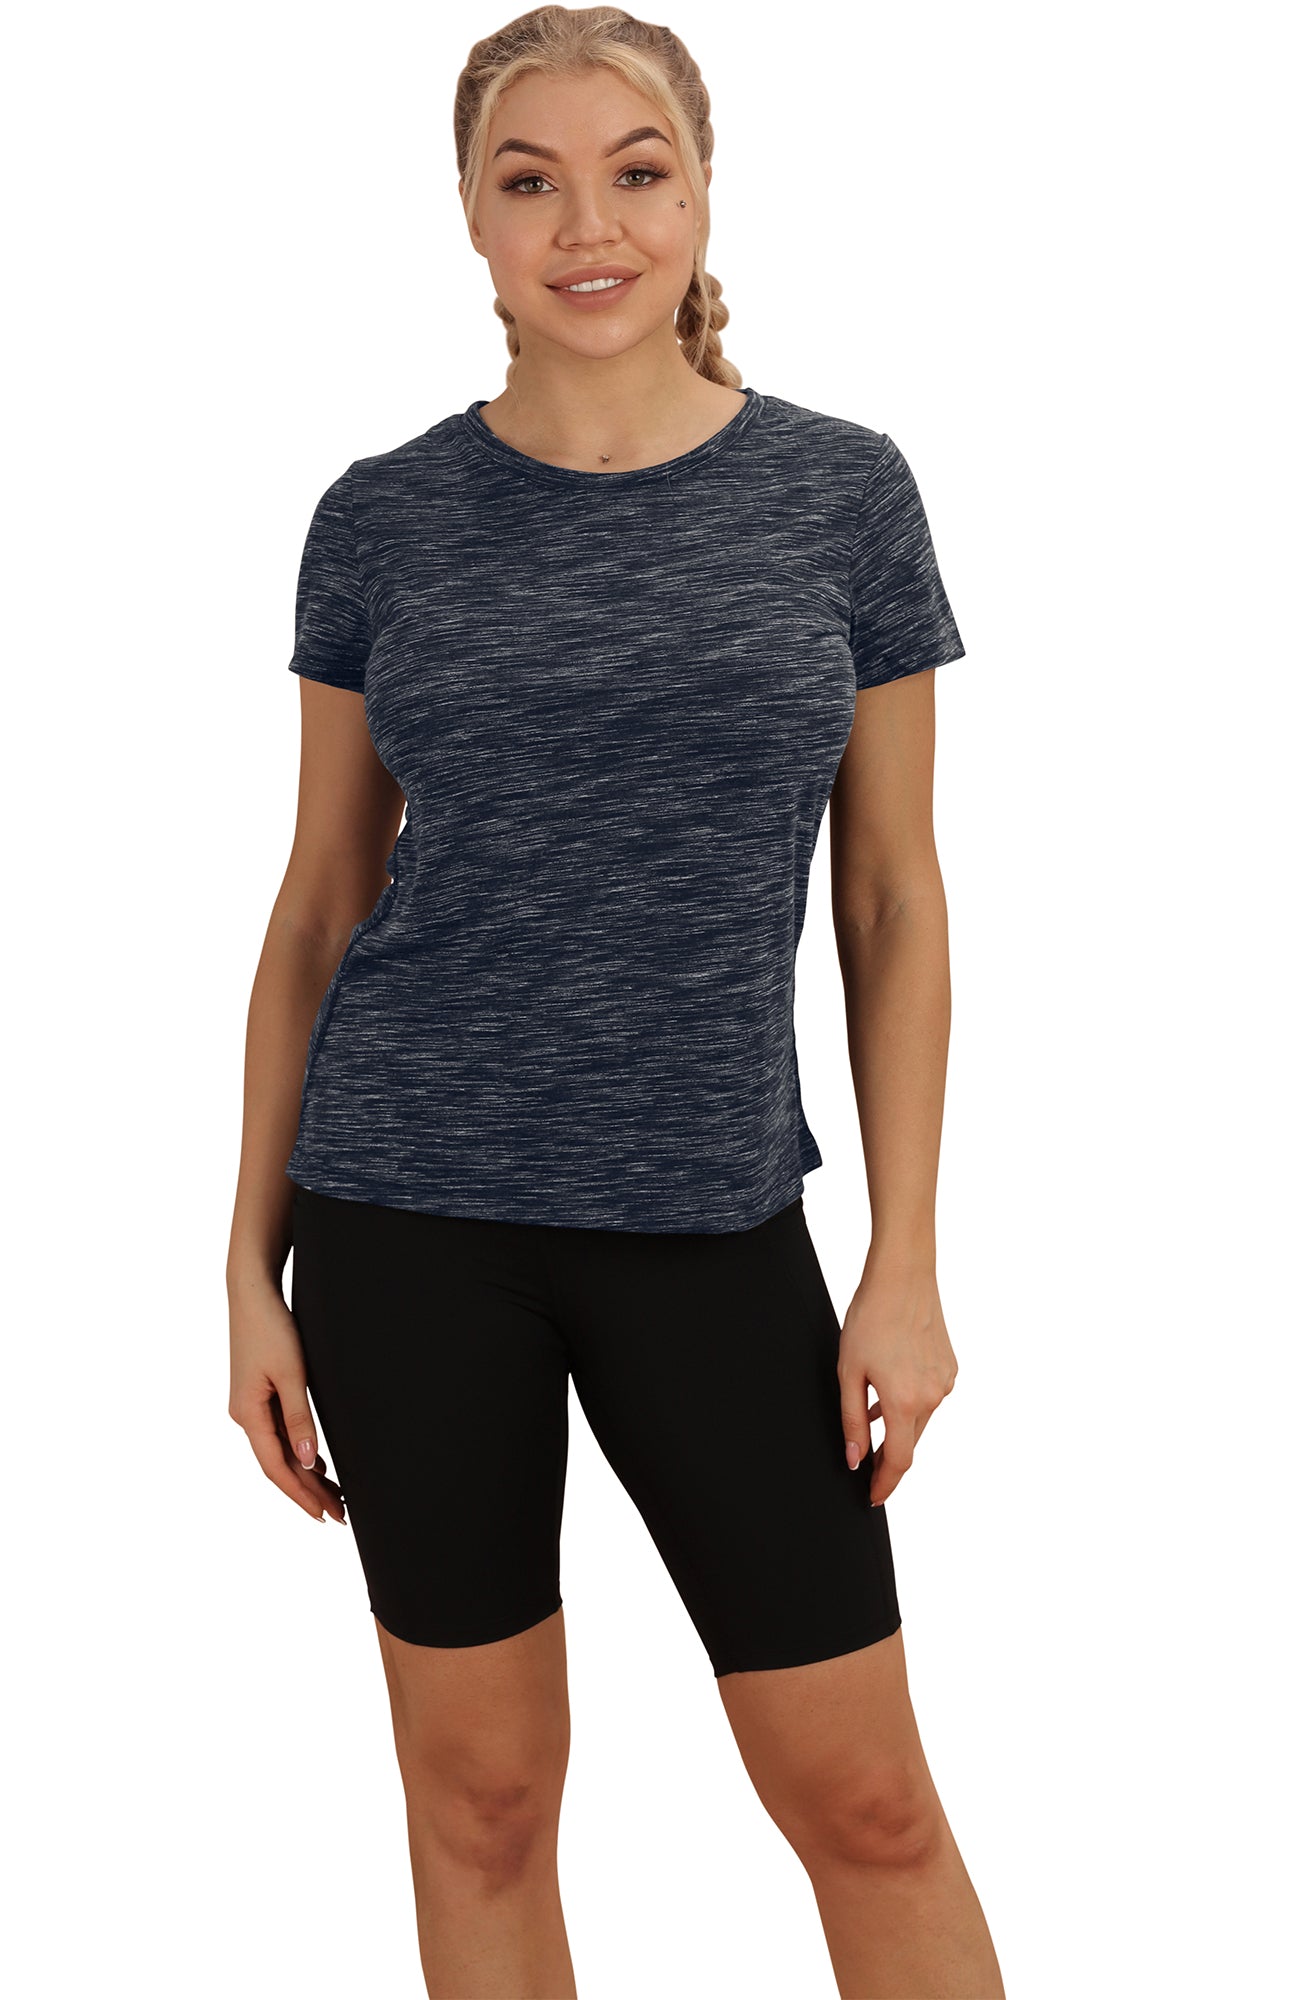  icyzone Workout T-Shirt for Women - Gym Running Yoga Tops  Athletic Shirts Raglan Short Sleeves (Aqua, Small) : Sports & Outdoors